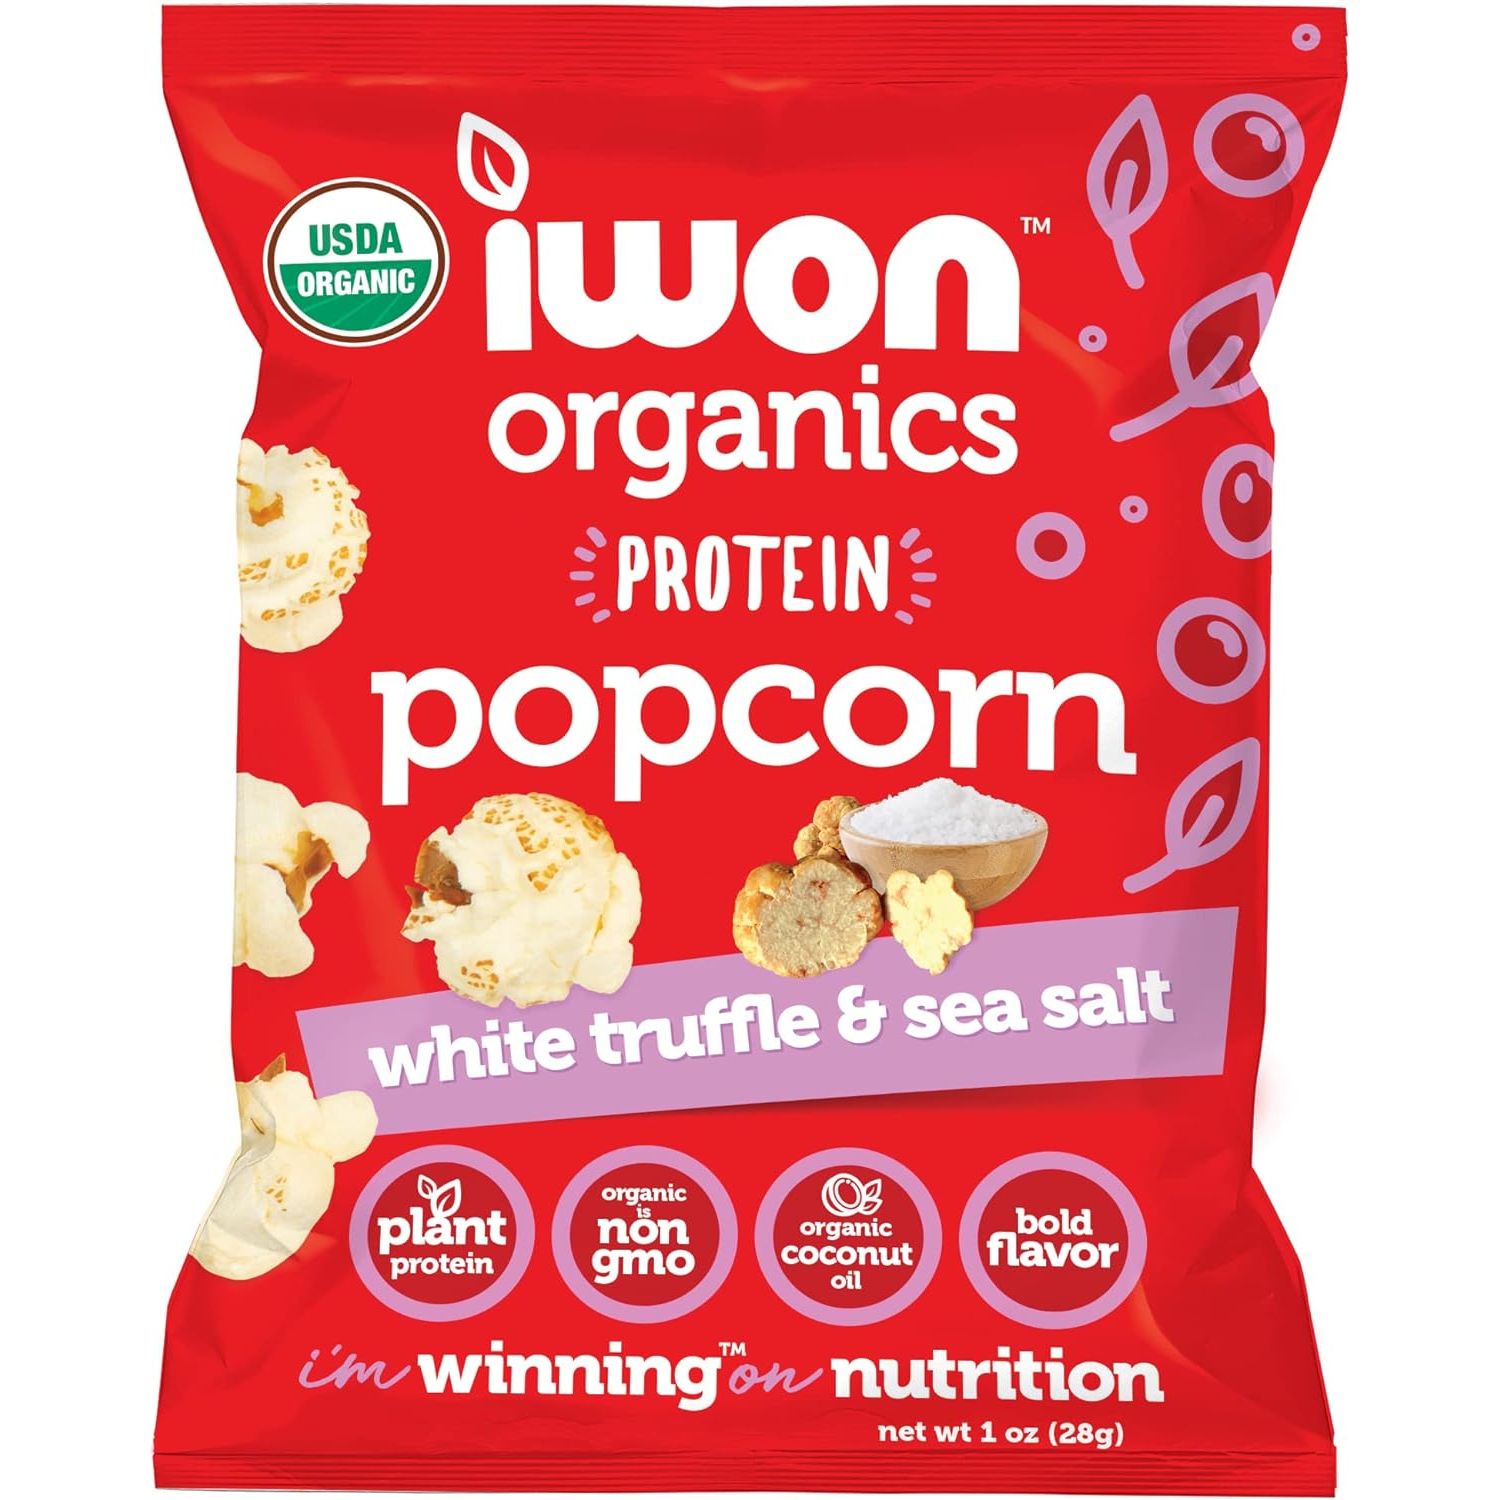 IWON Organics Protein Popcorn (1 bag) Protein Snacks White Truffle & Sea Salt IWON Organics